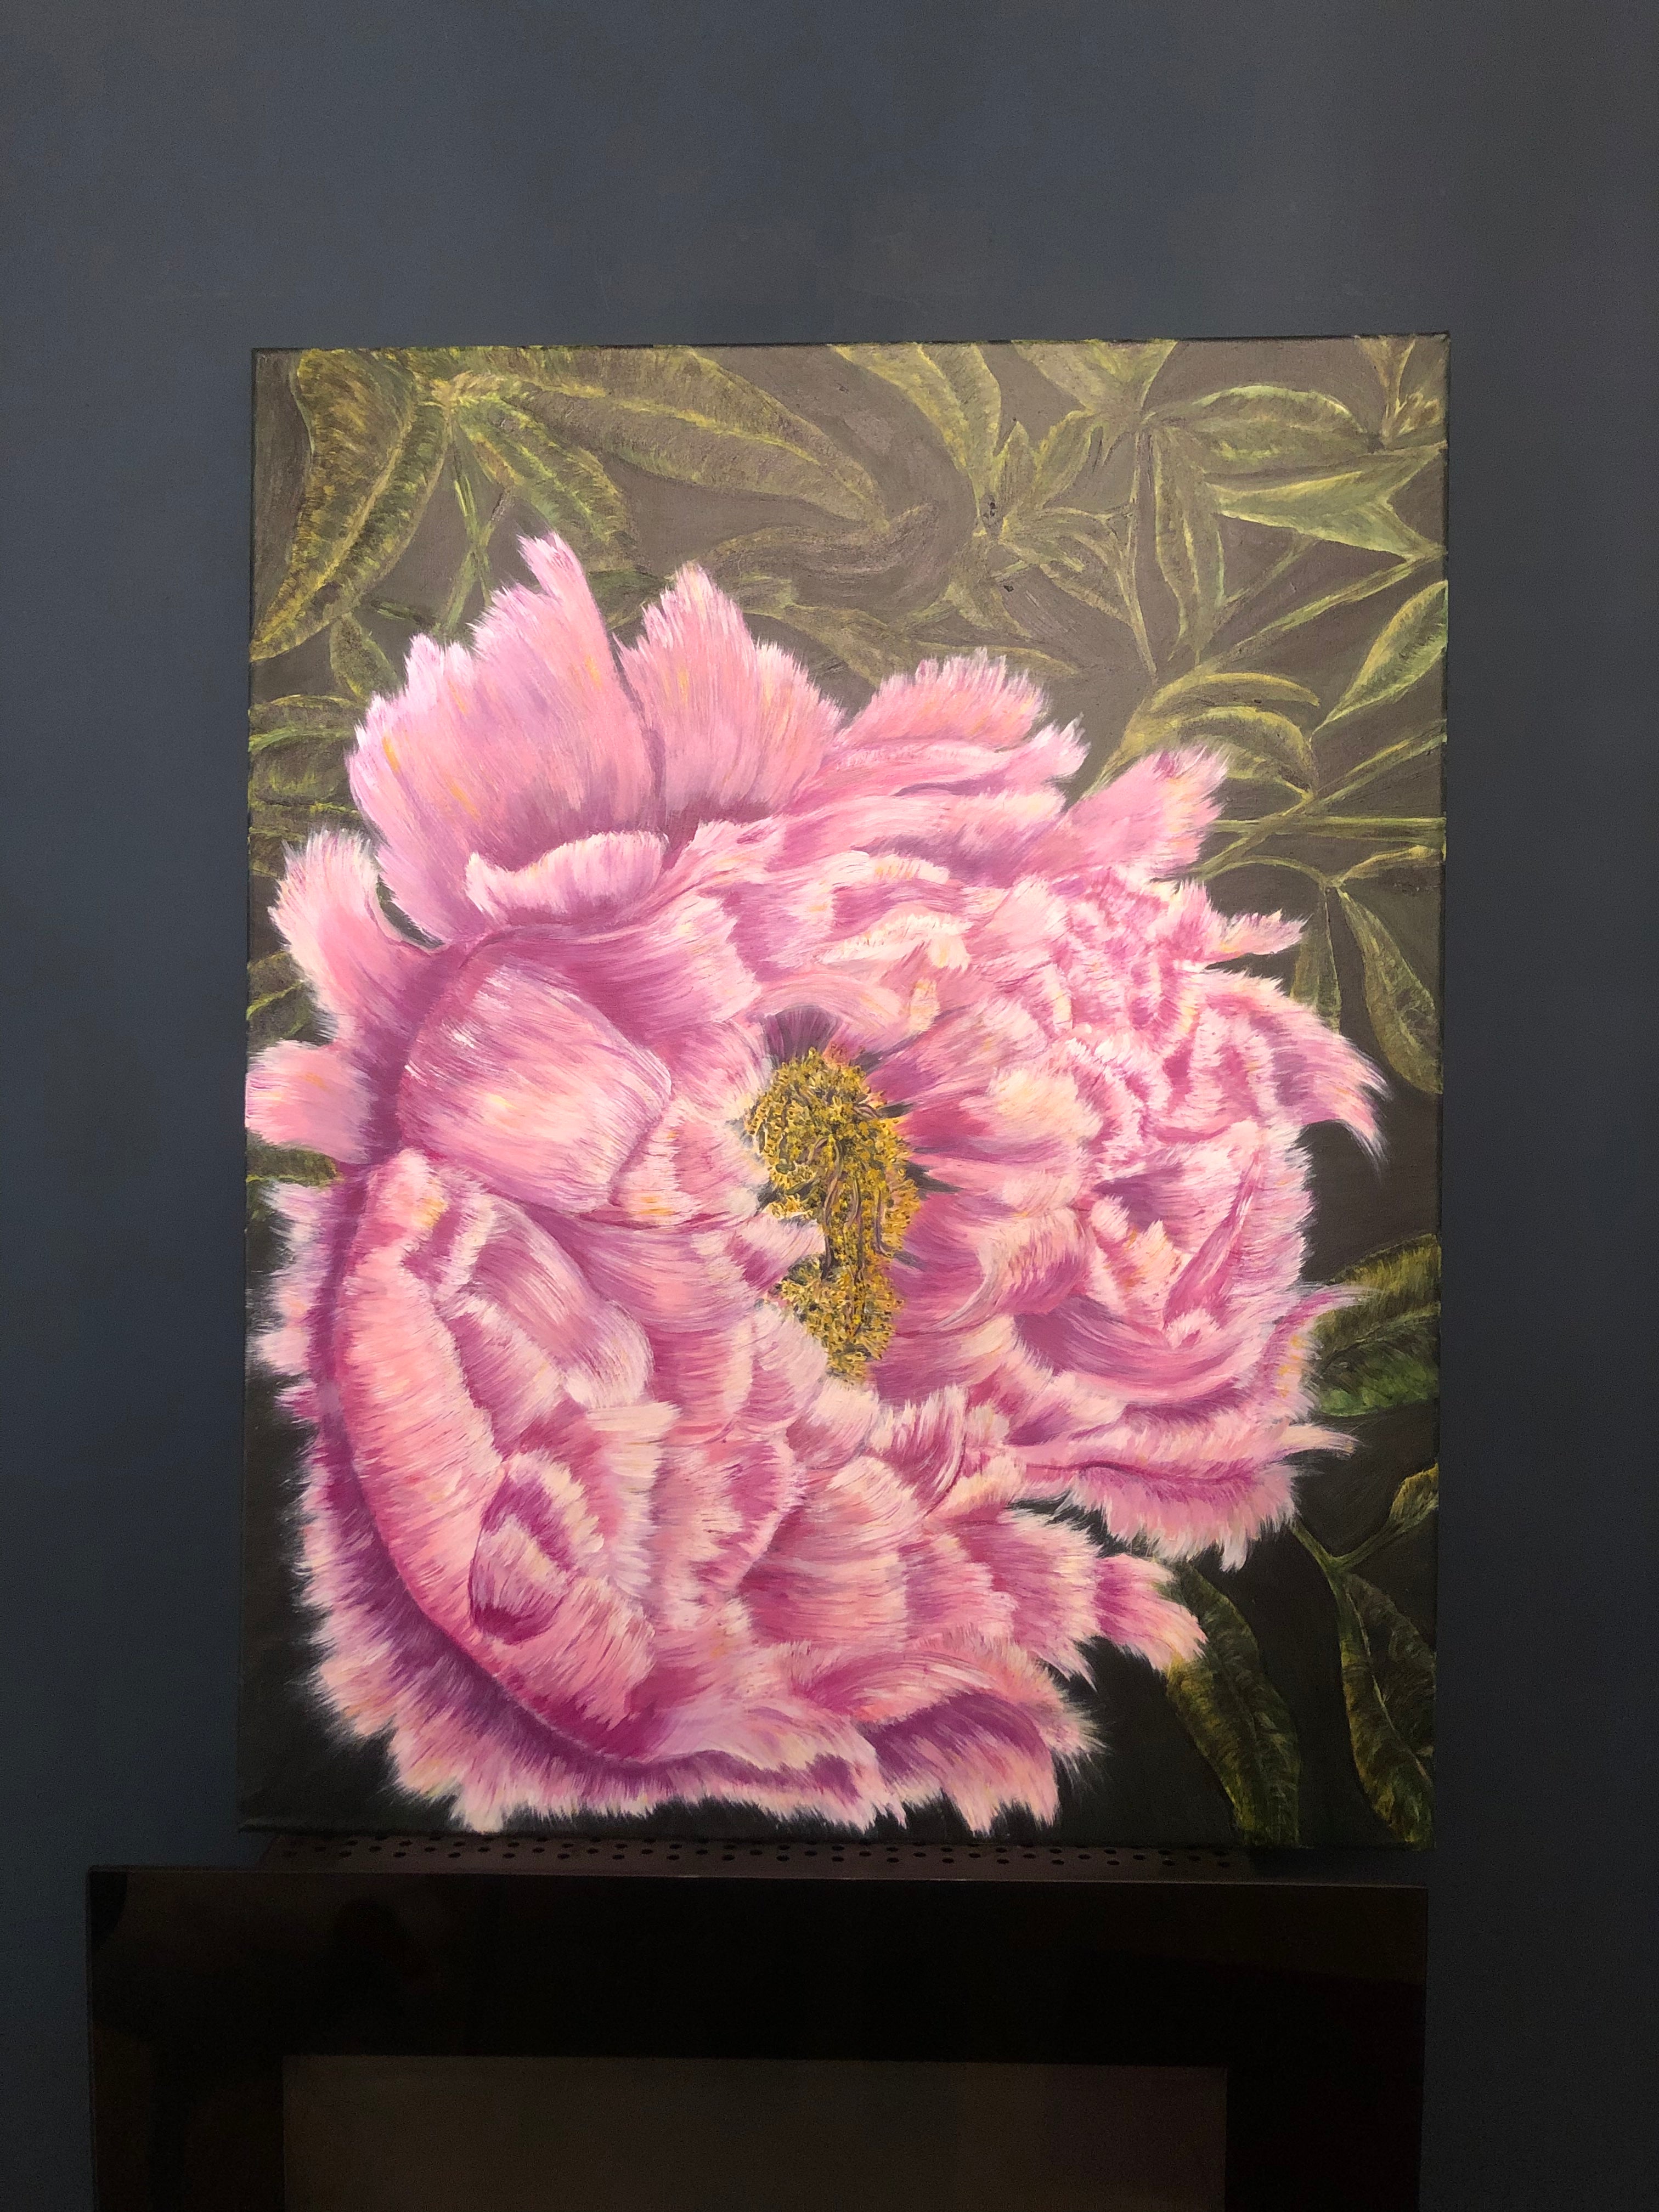 Pink Peony on Canvas Acrylic Painting - Sarah Horne Botanicals